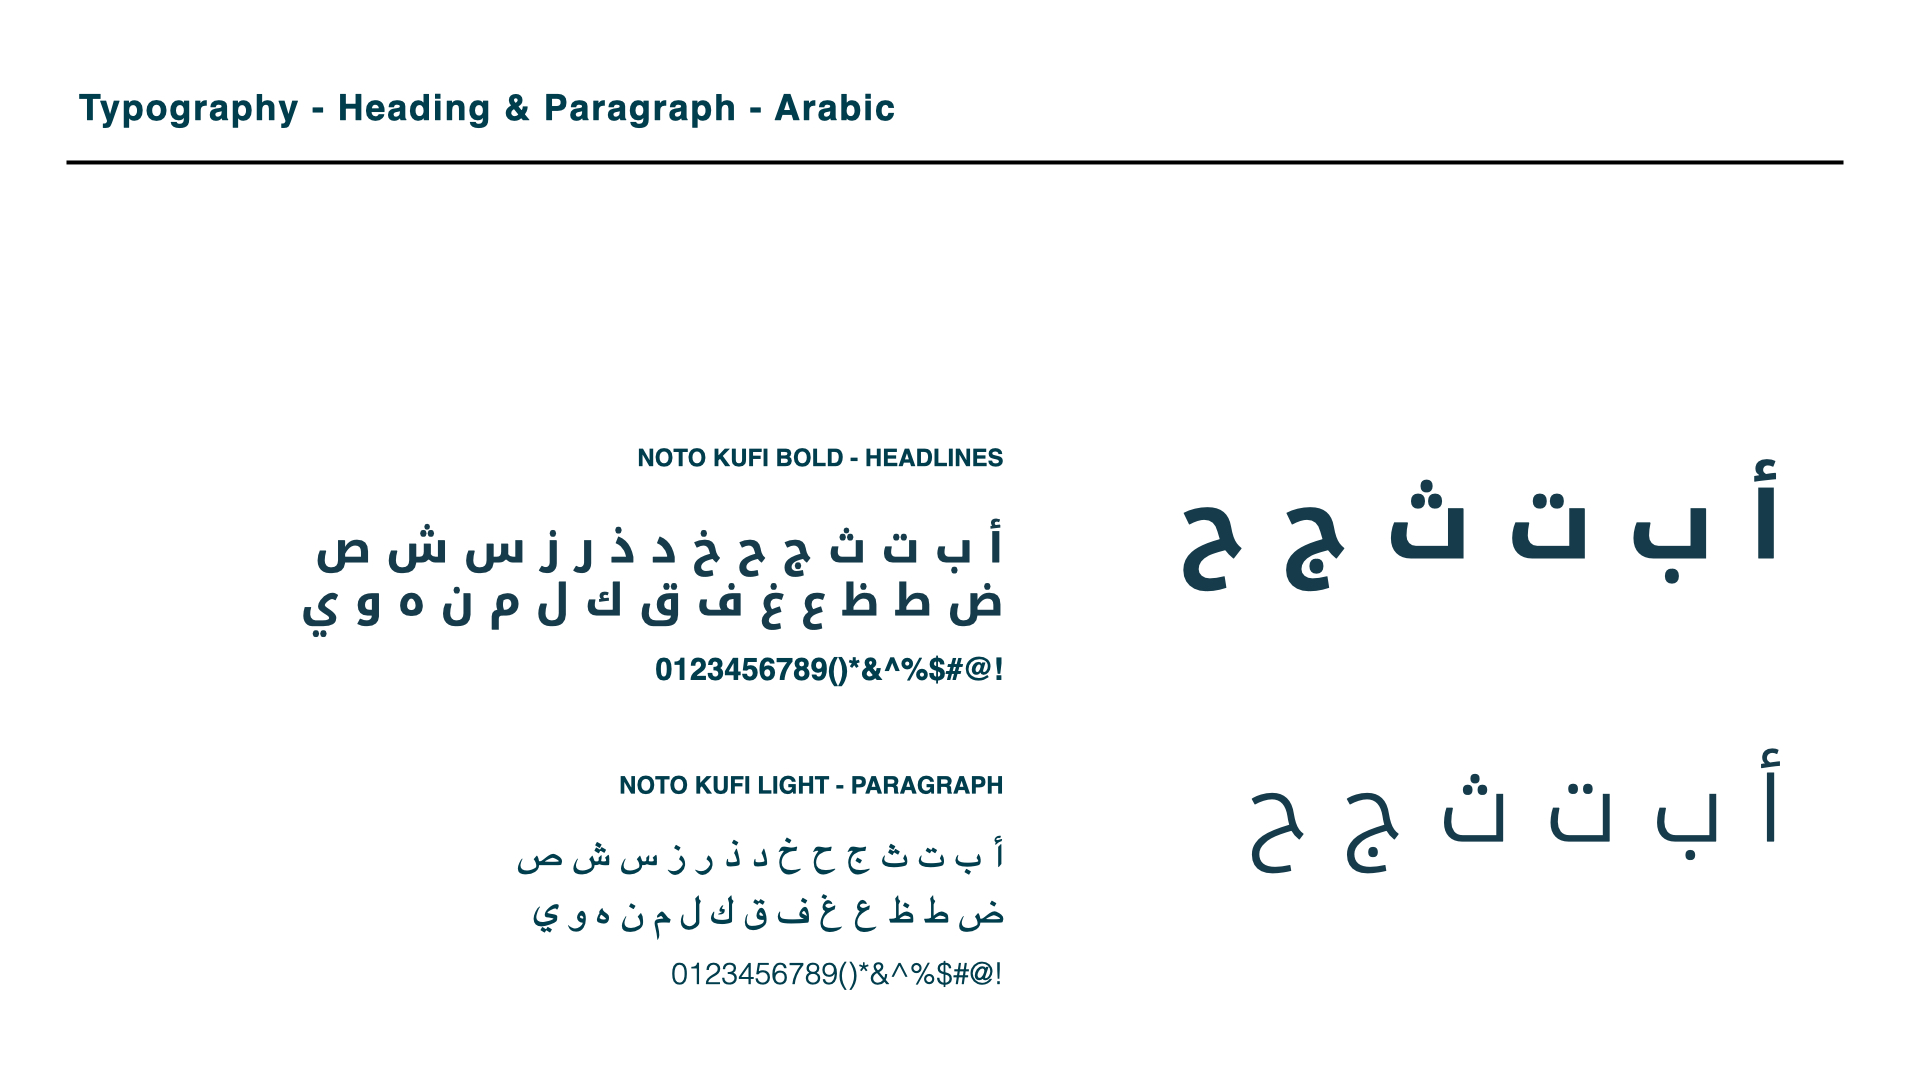 9Arabic Font Usage-Vowels